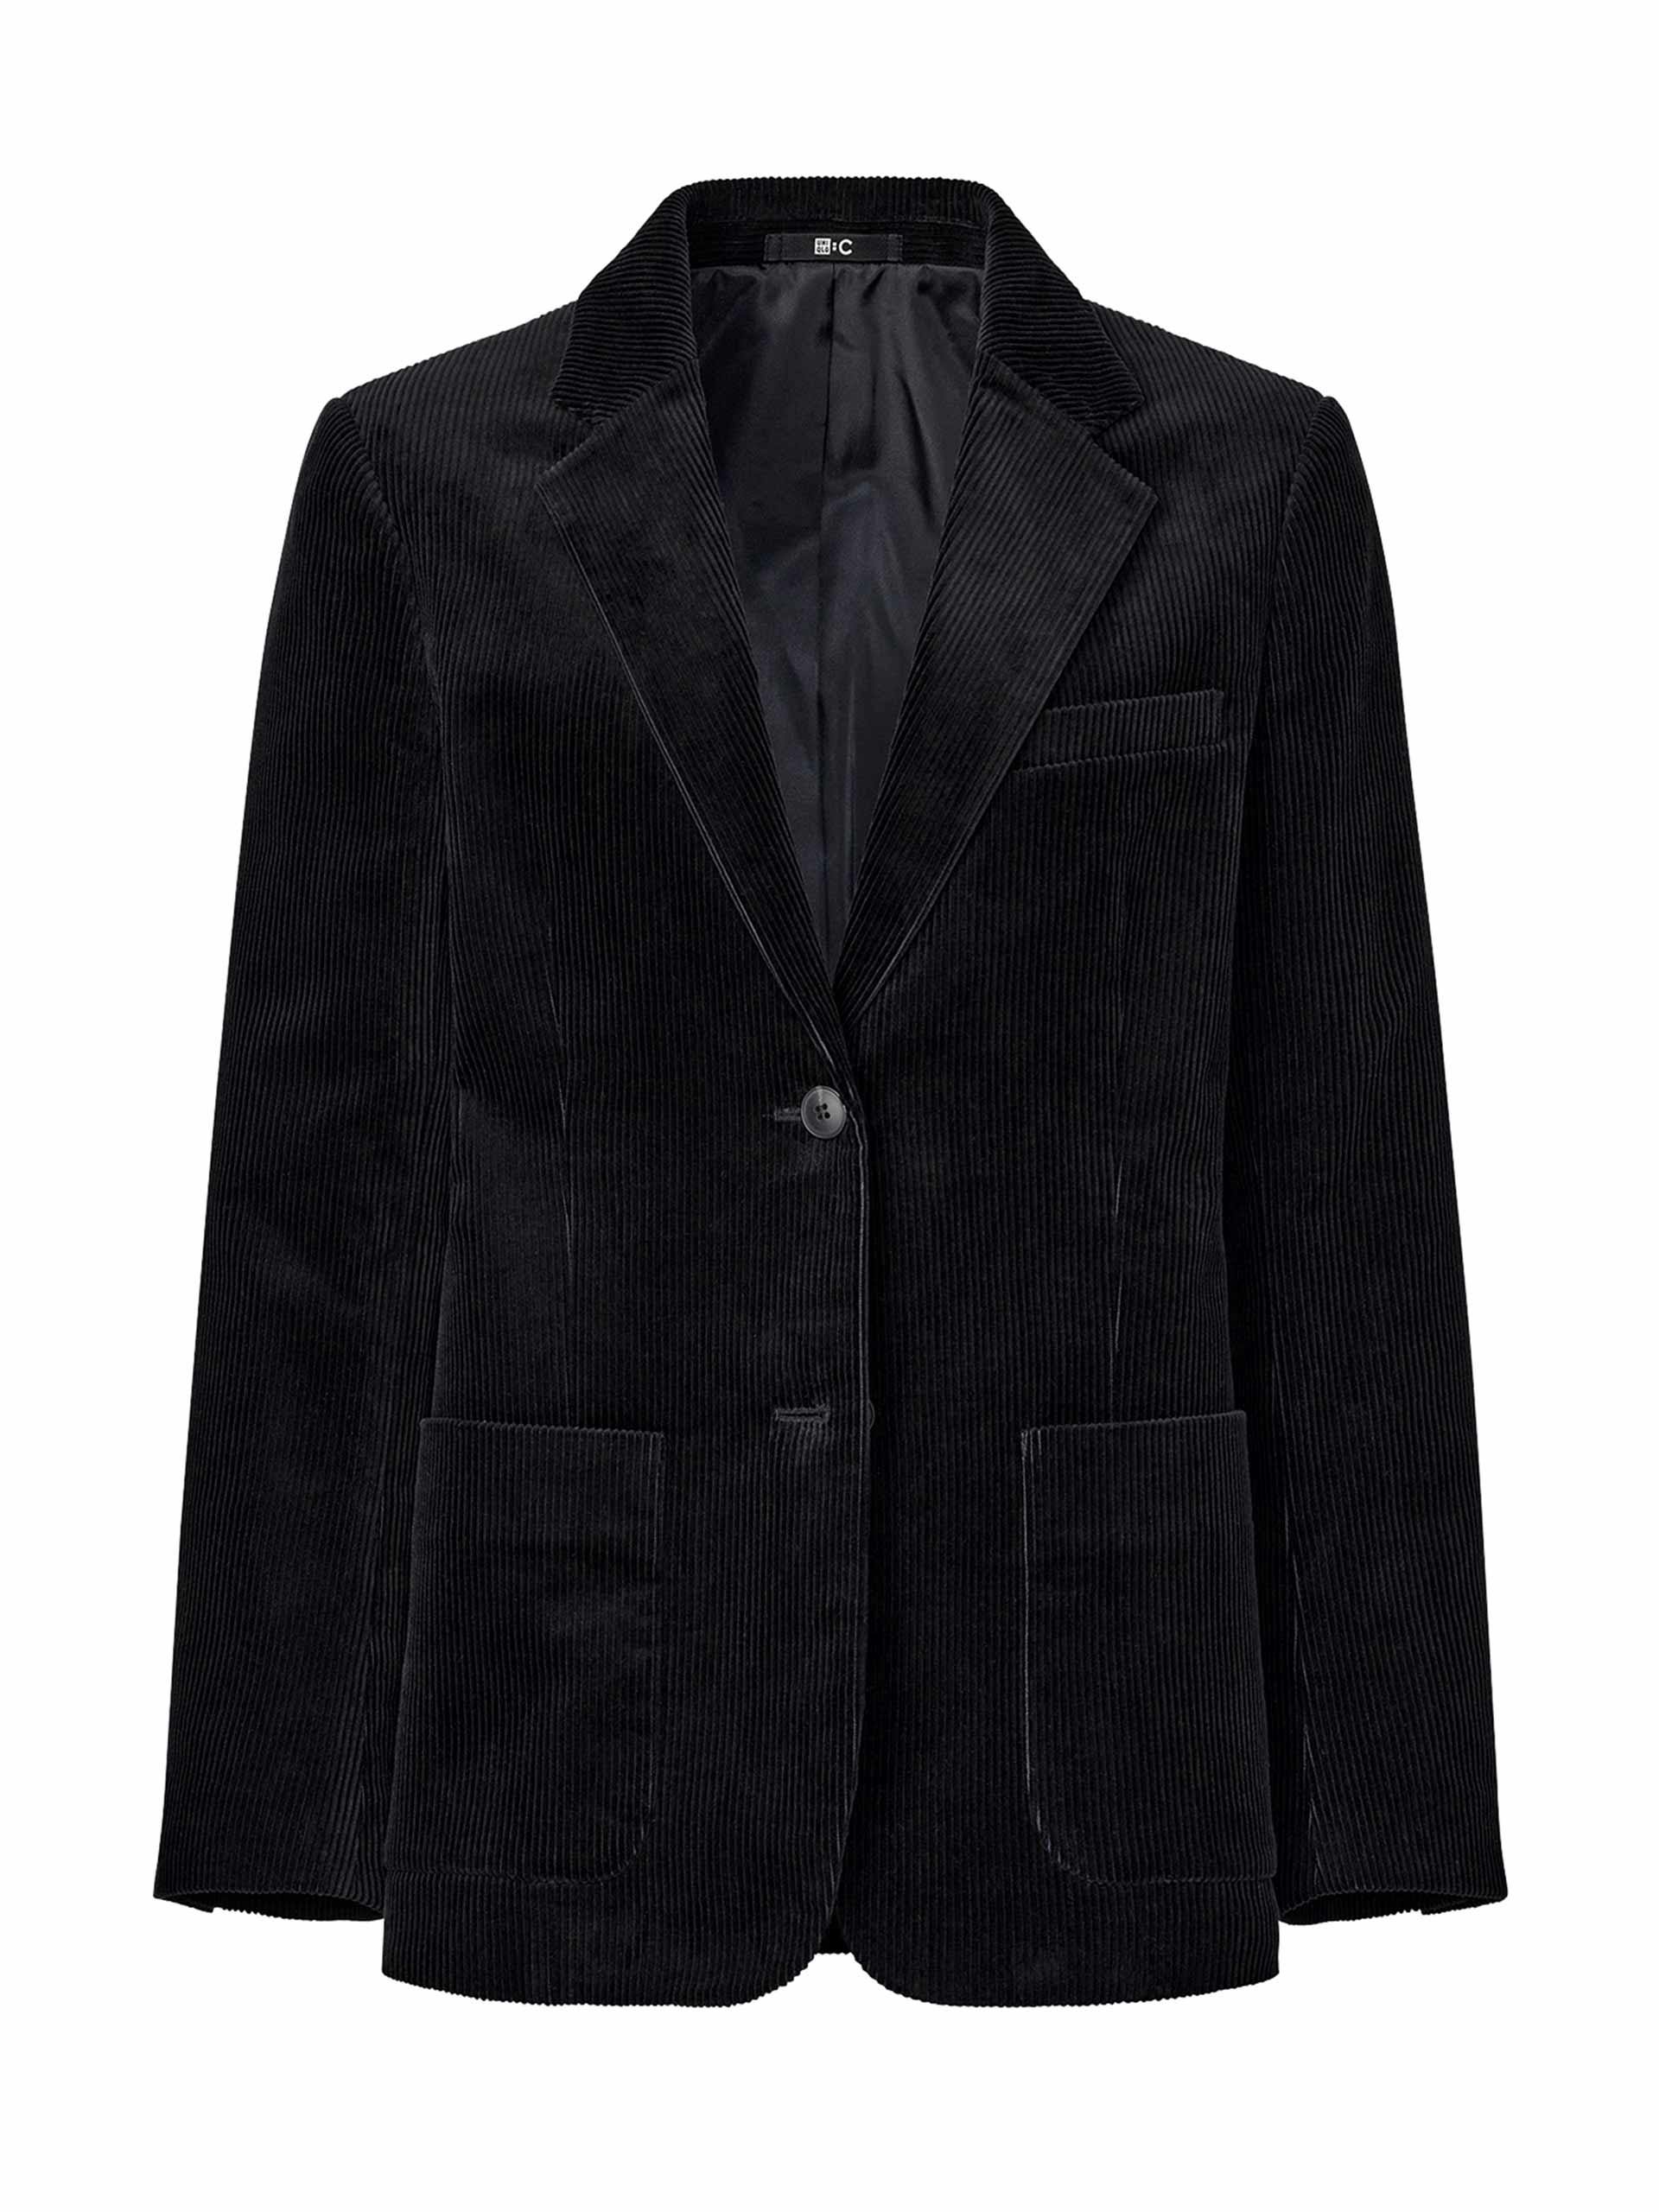 Black brushed jersey blazer jacket